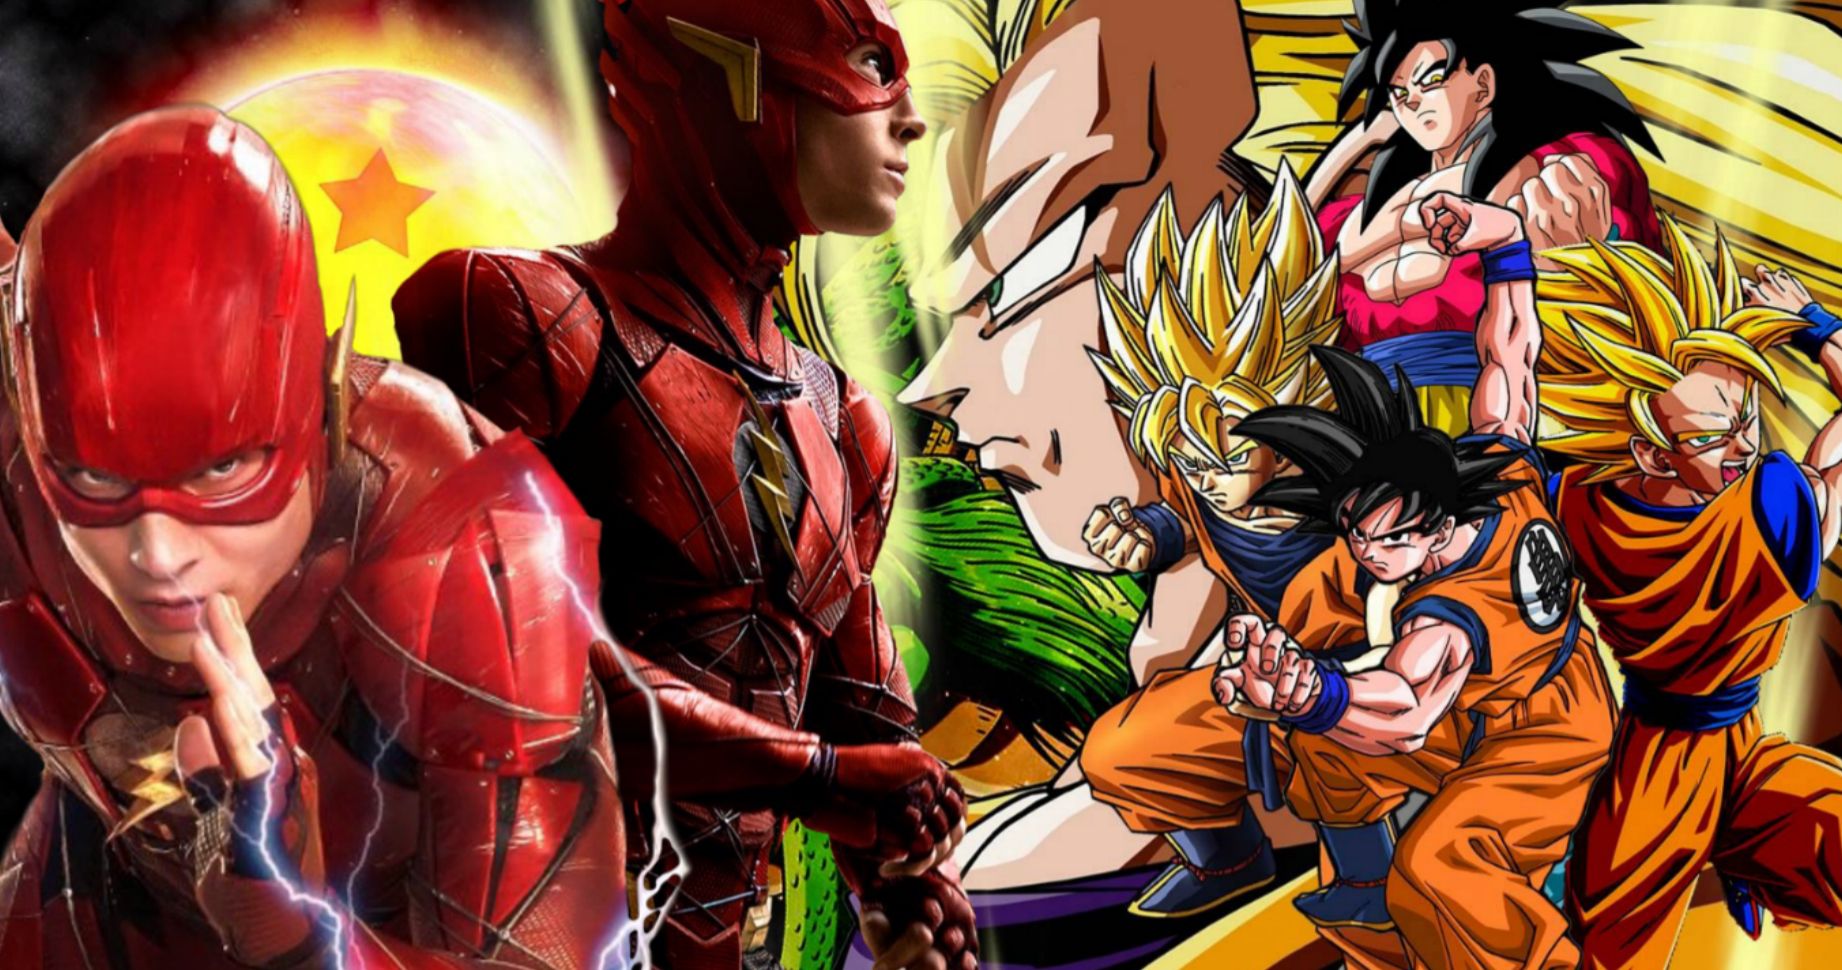 The Flash Comic Brings Dragon Ball Z Into the DC Universe